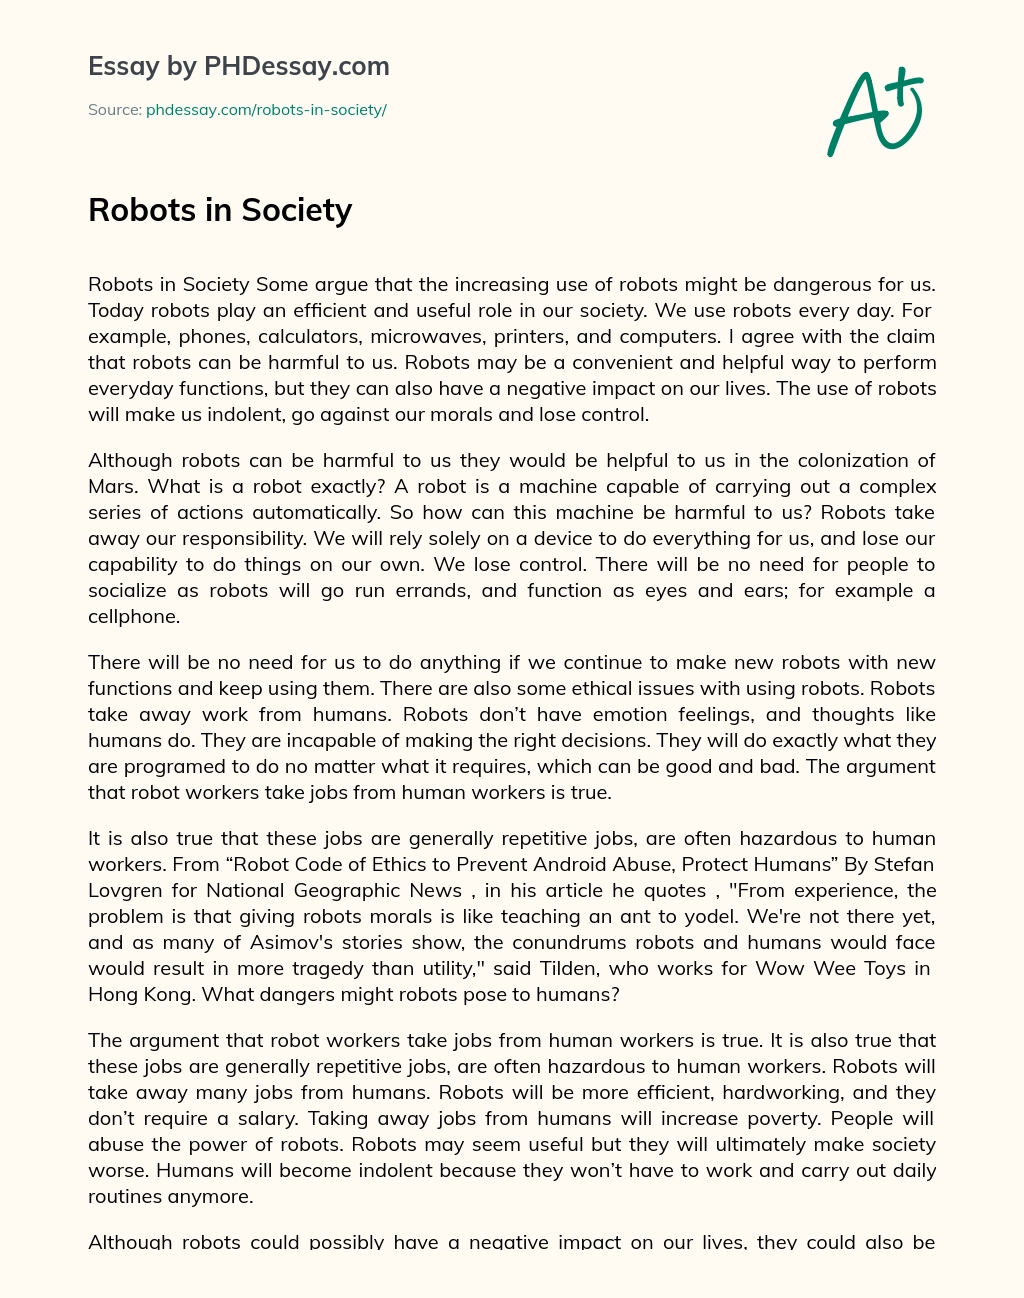 Robots in Society essay